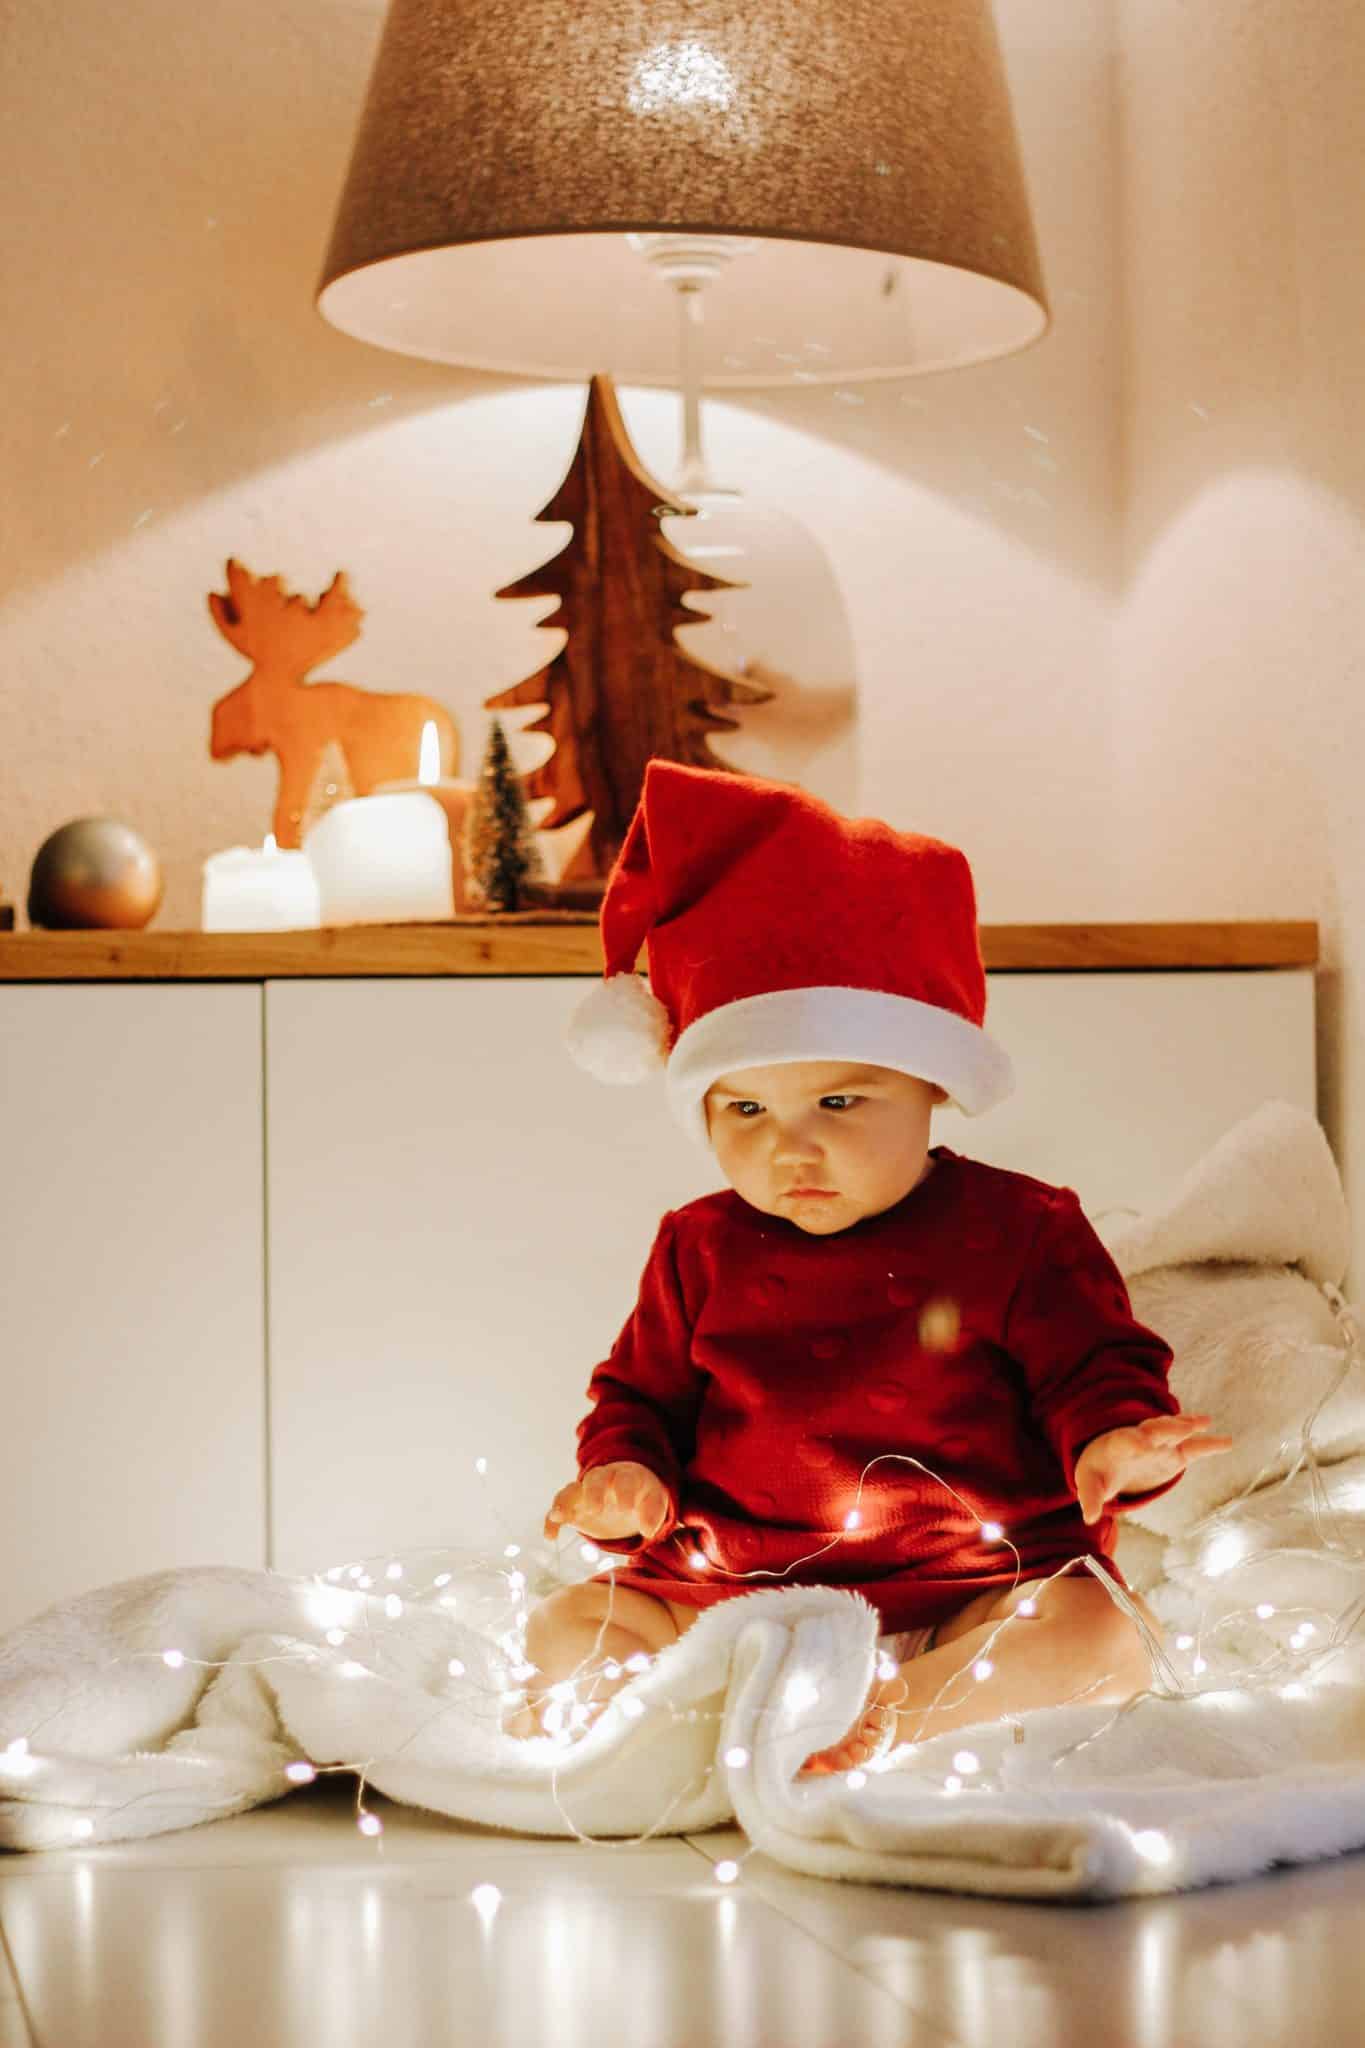 Baby's 1st Christmas - making memories, sensory